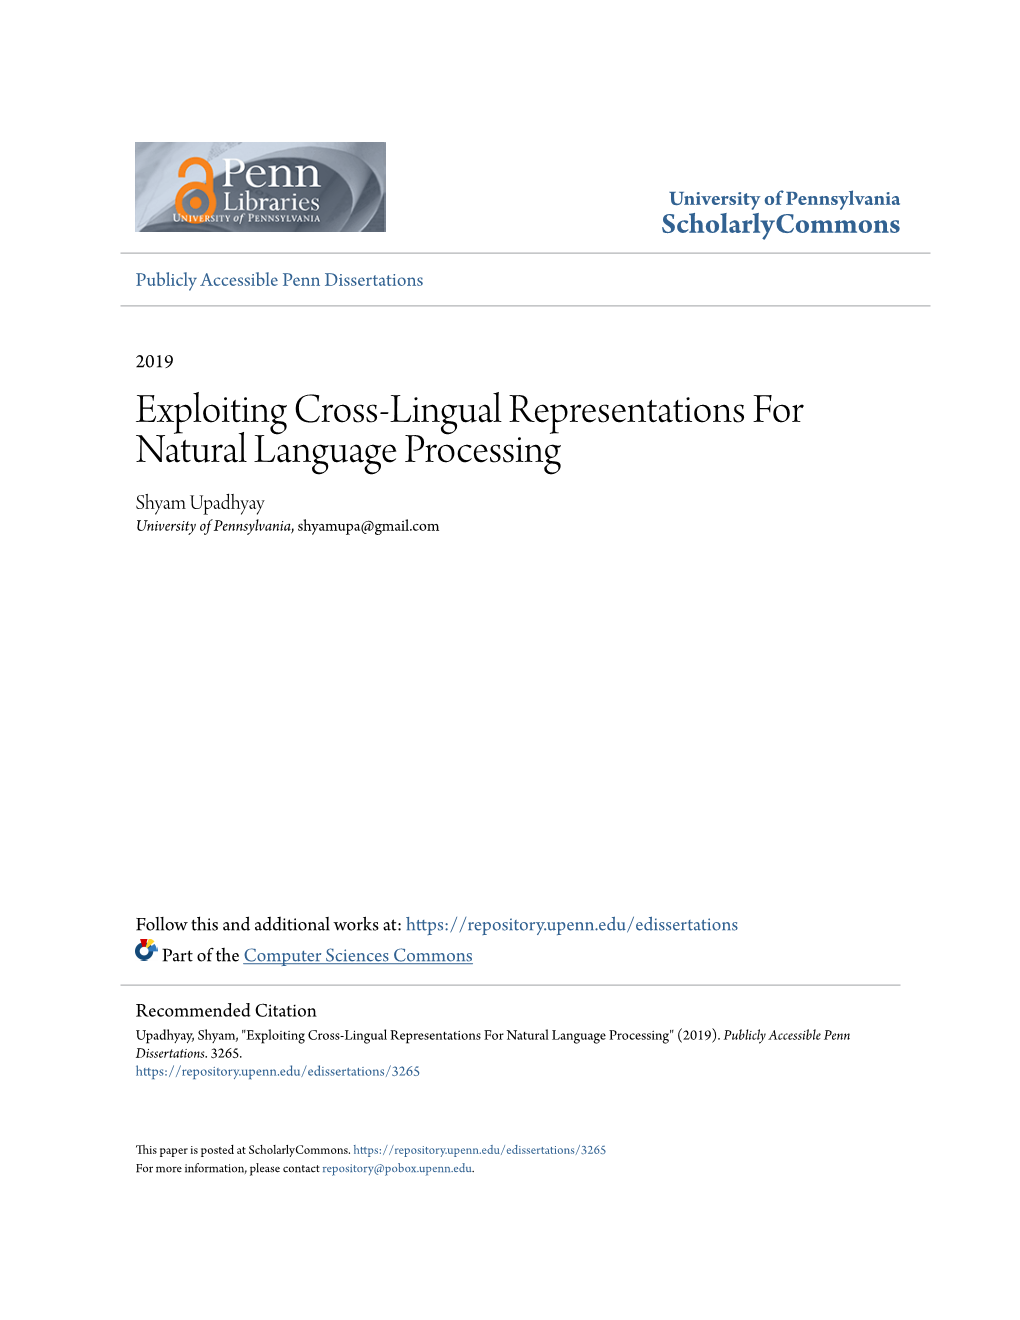 Exploiting Cross-Lingual Representations for Natural Language Processing Shyam Upadhyay University of Pennsylvania, Shyamupa@Gmail.Com